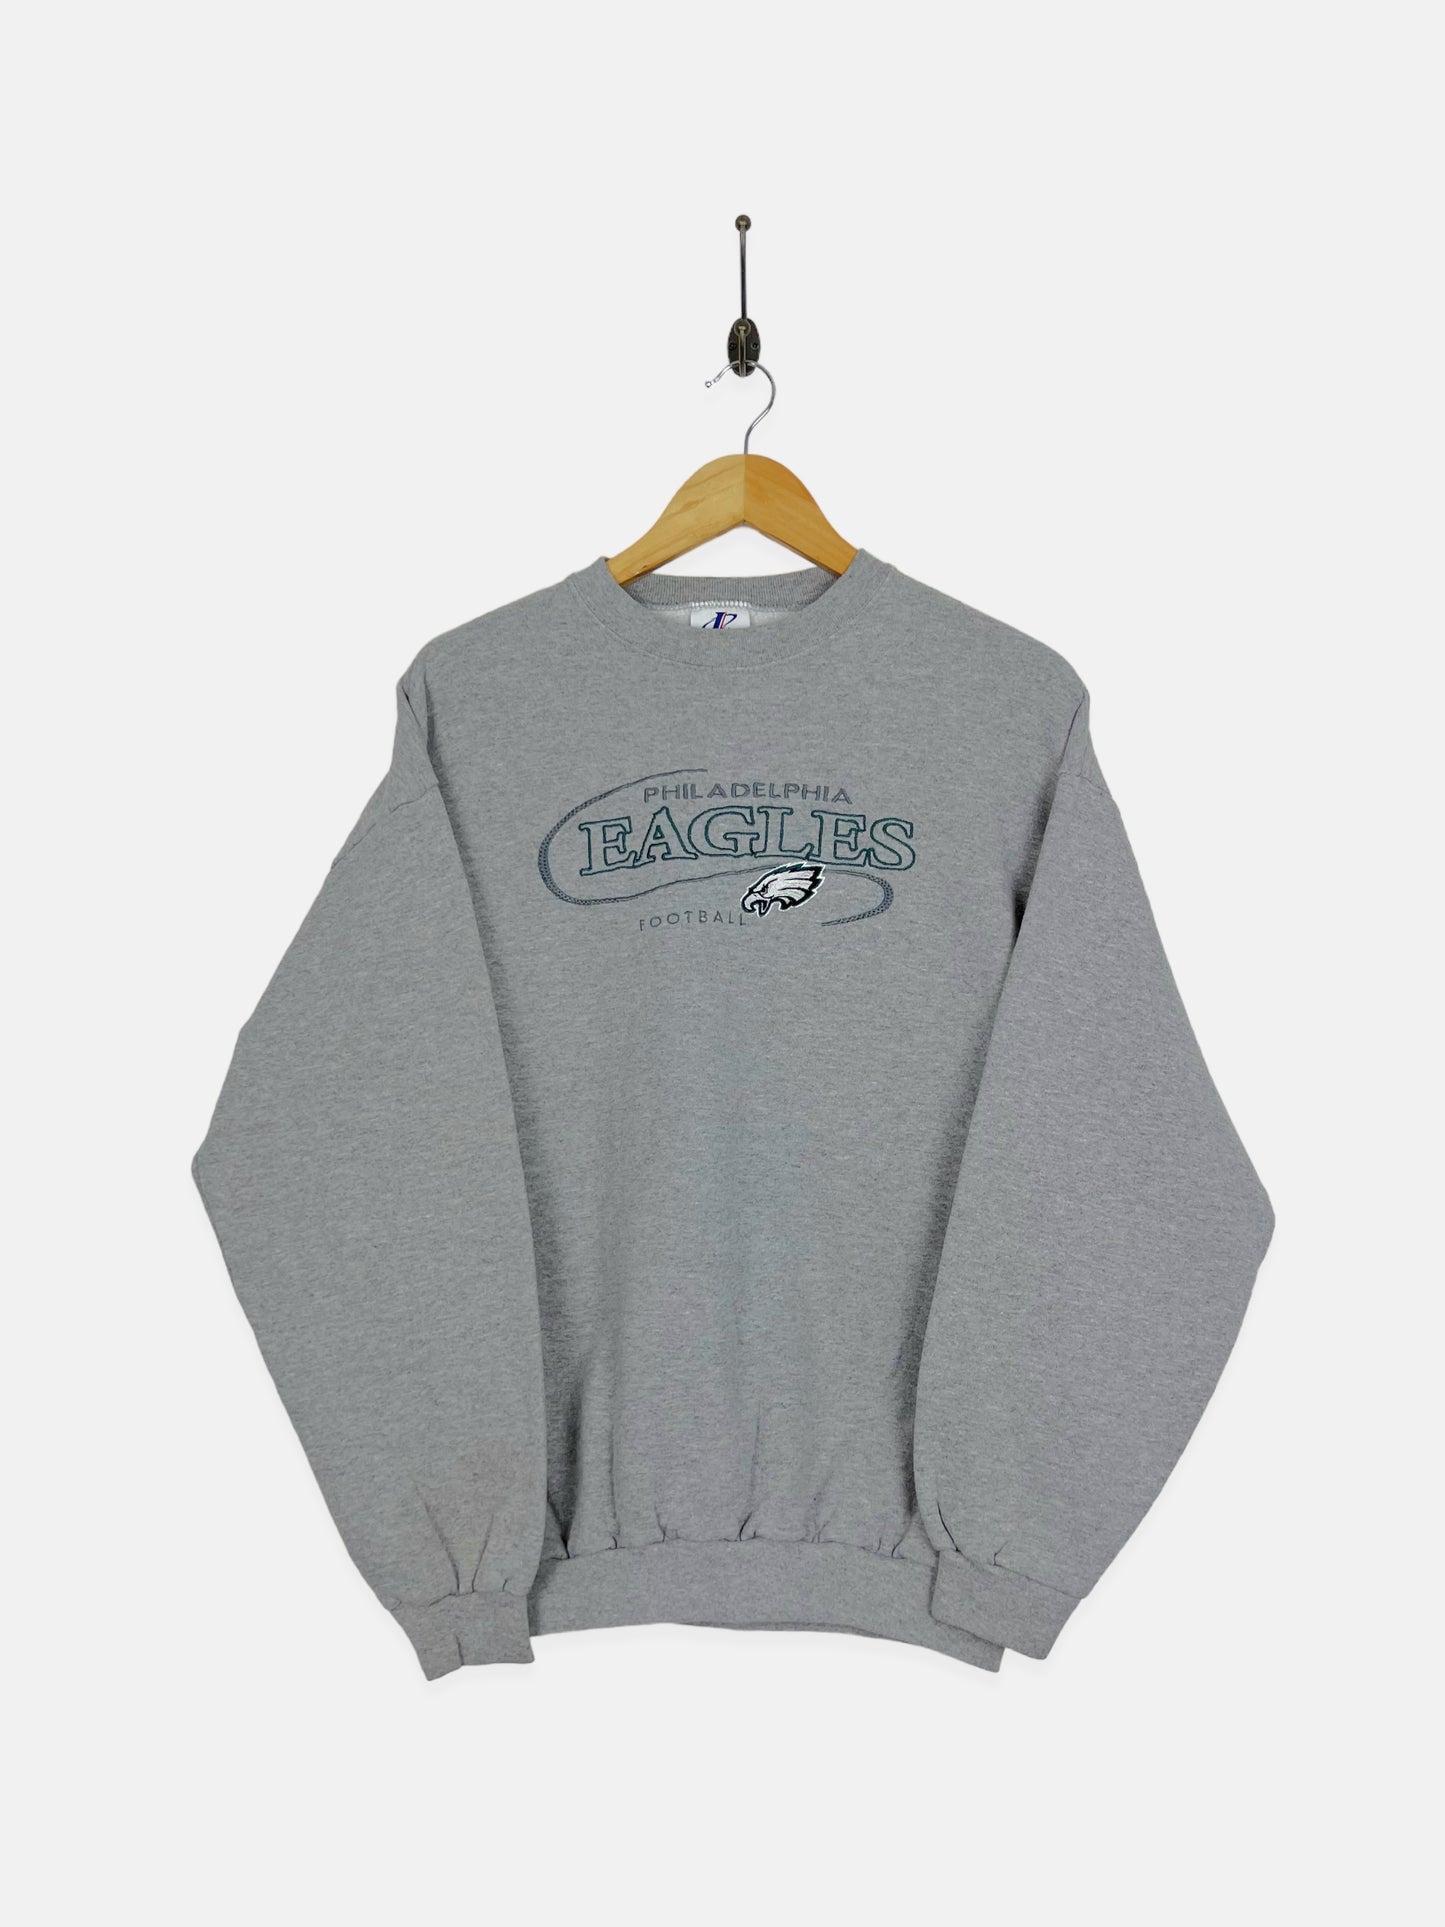 90's Philadelphia Eagles NFL USA Made Embroidered Vintage Sweatshirt Size M-L